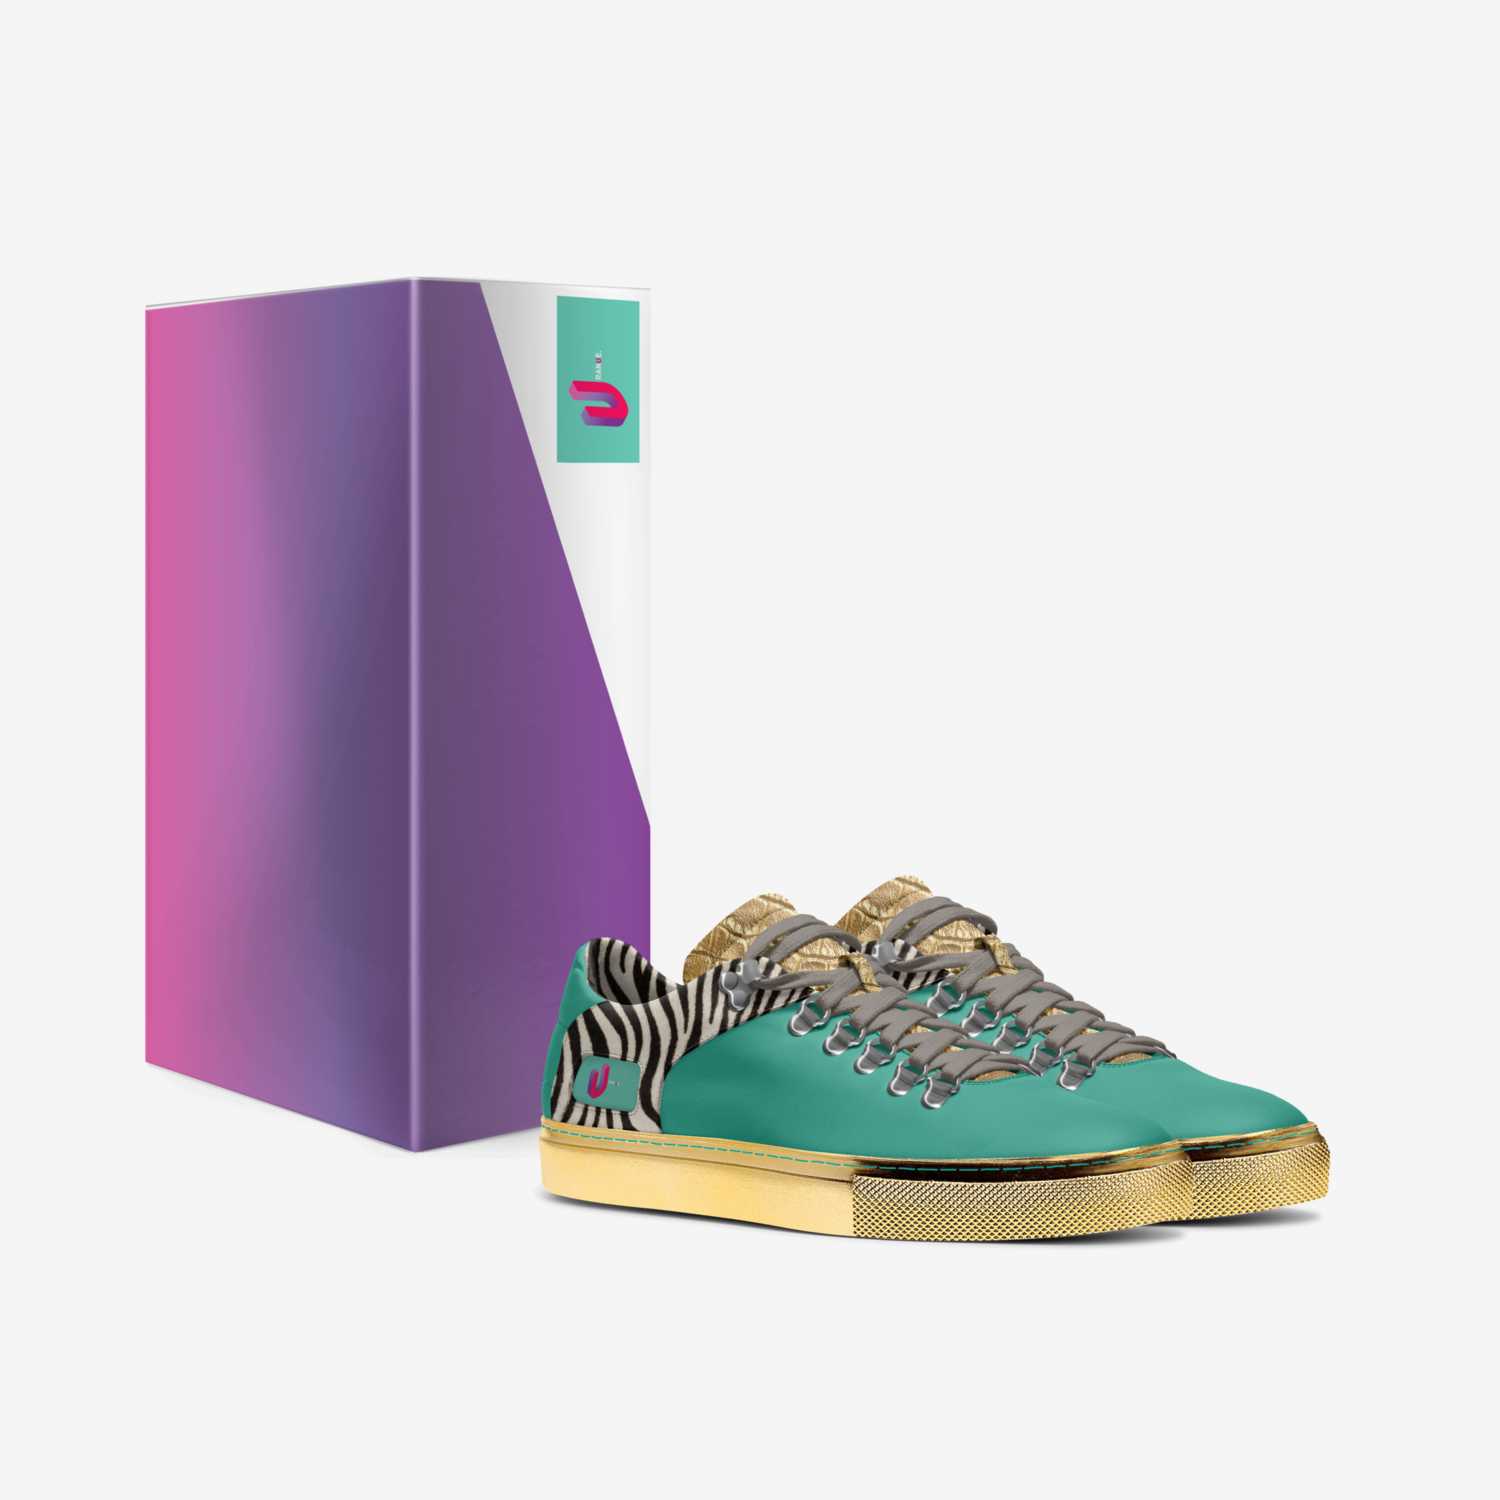 U1 custom made in Italy shoes by Glenn Holmes ||| | Box view